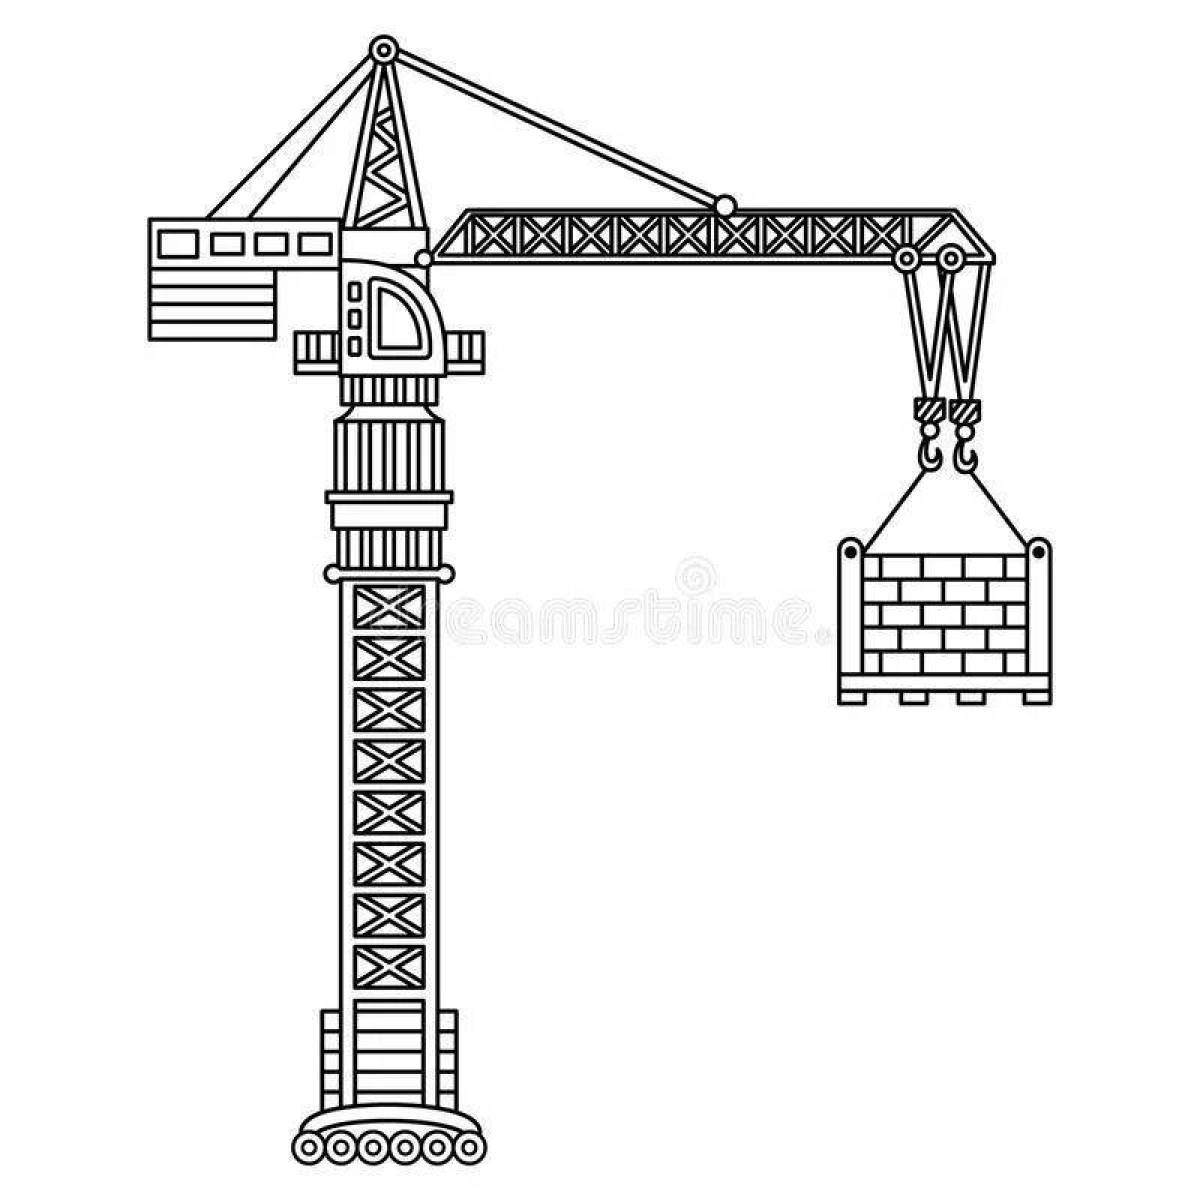 Tower crane #2